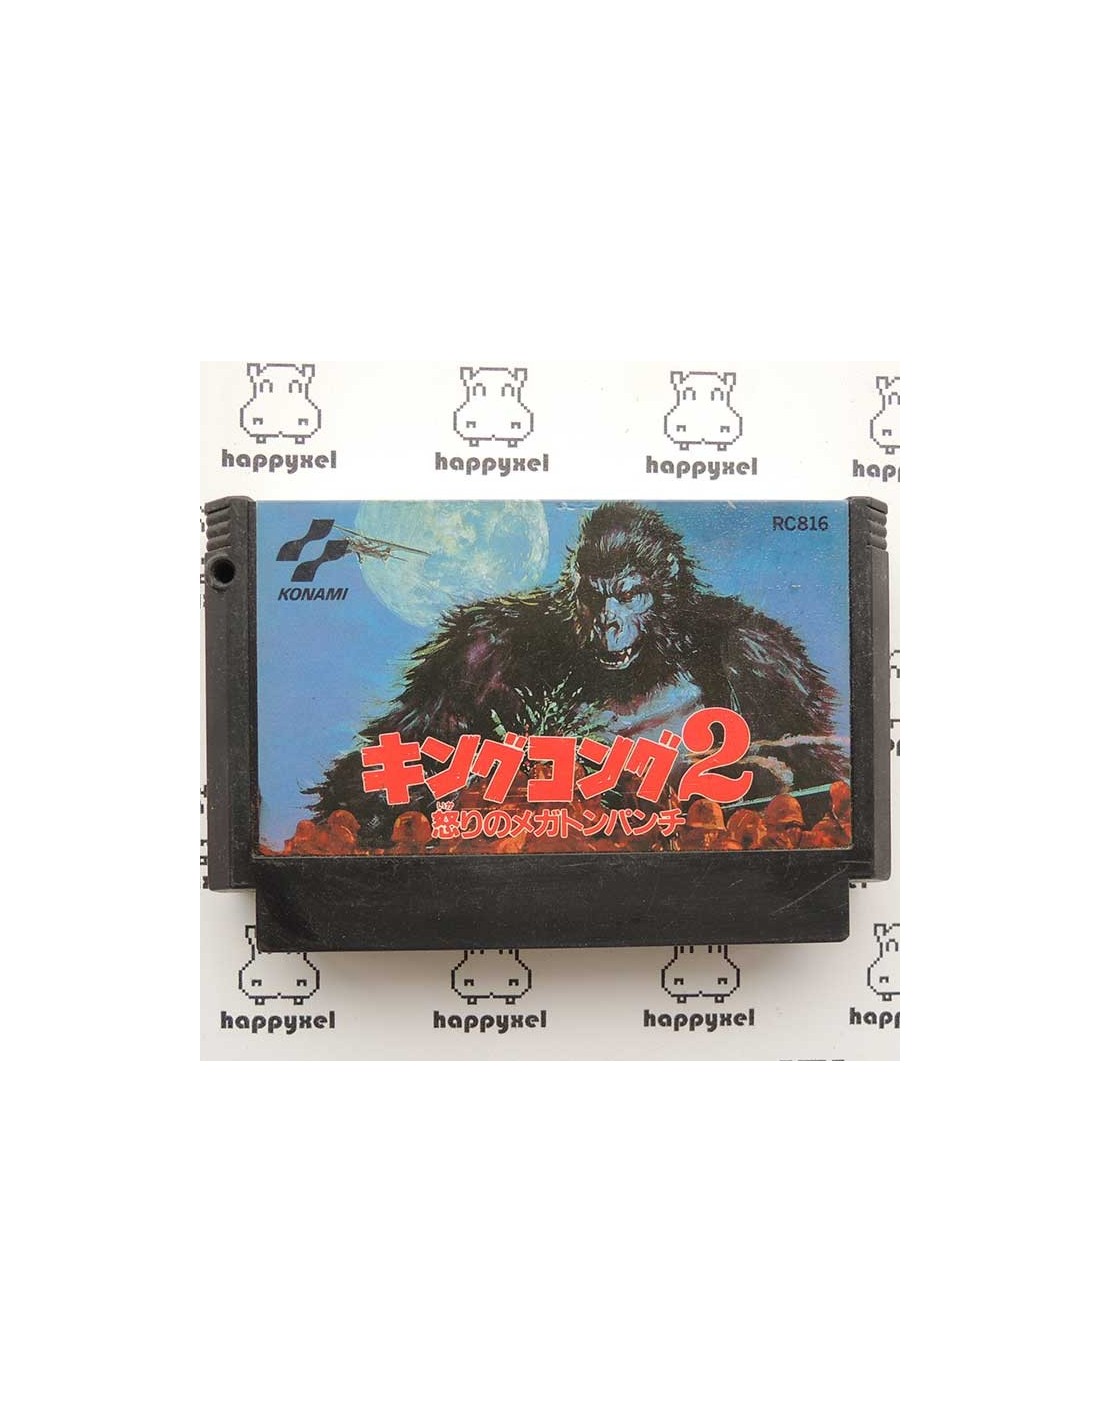 King Kong 2 (loose) Famicom